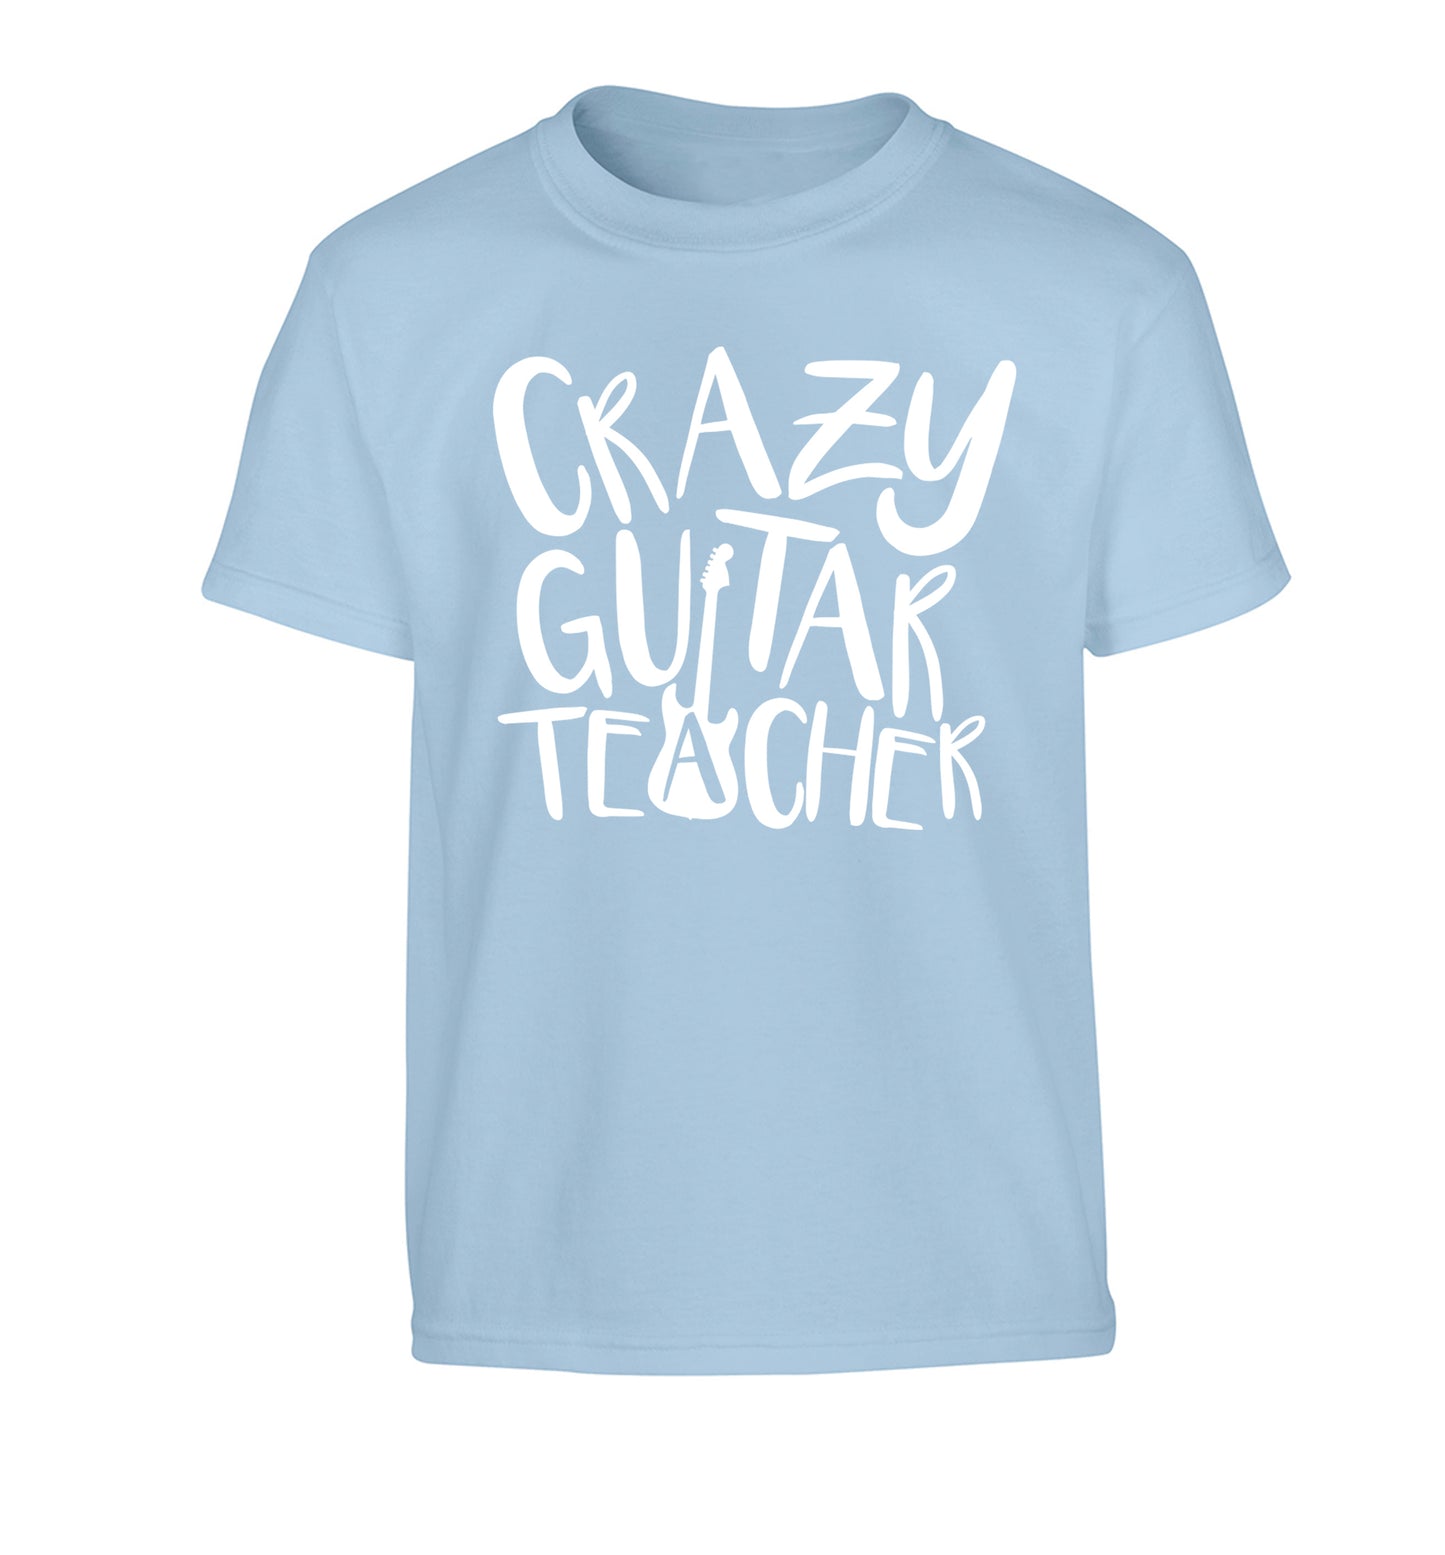 Crazy guitar teacher Children's light blue Tshirt 12-13 Years